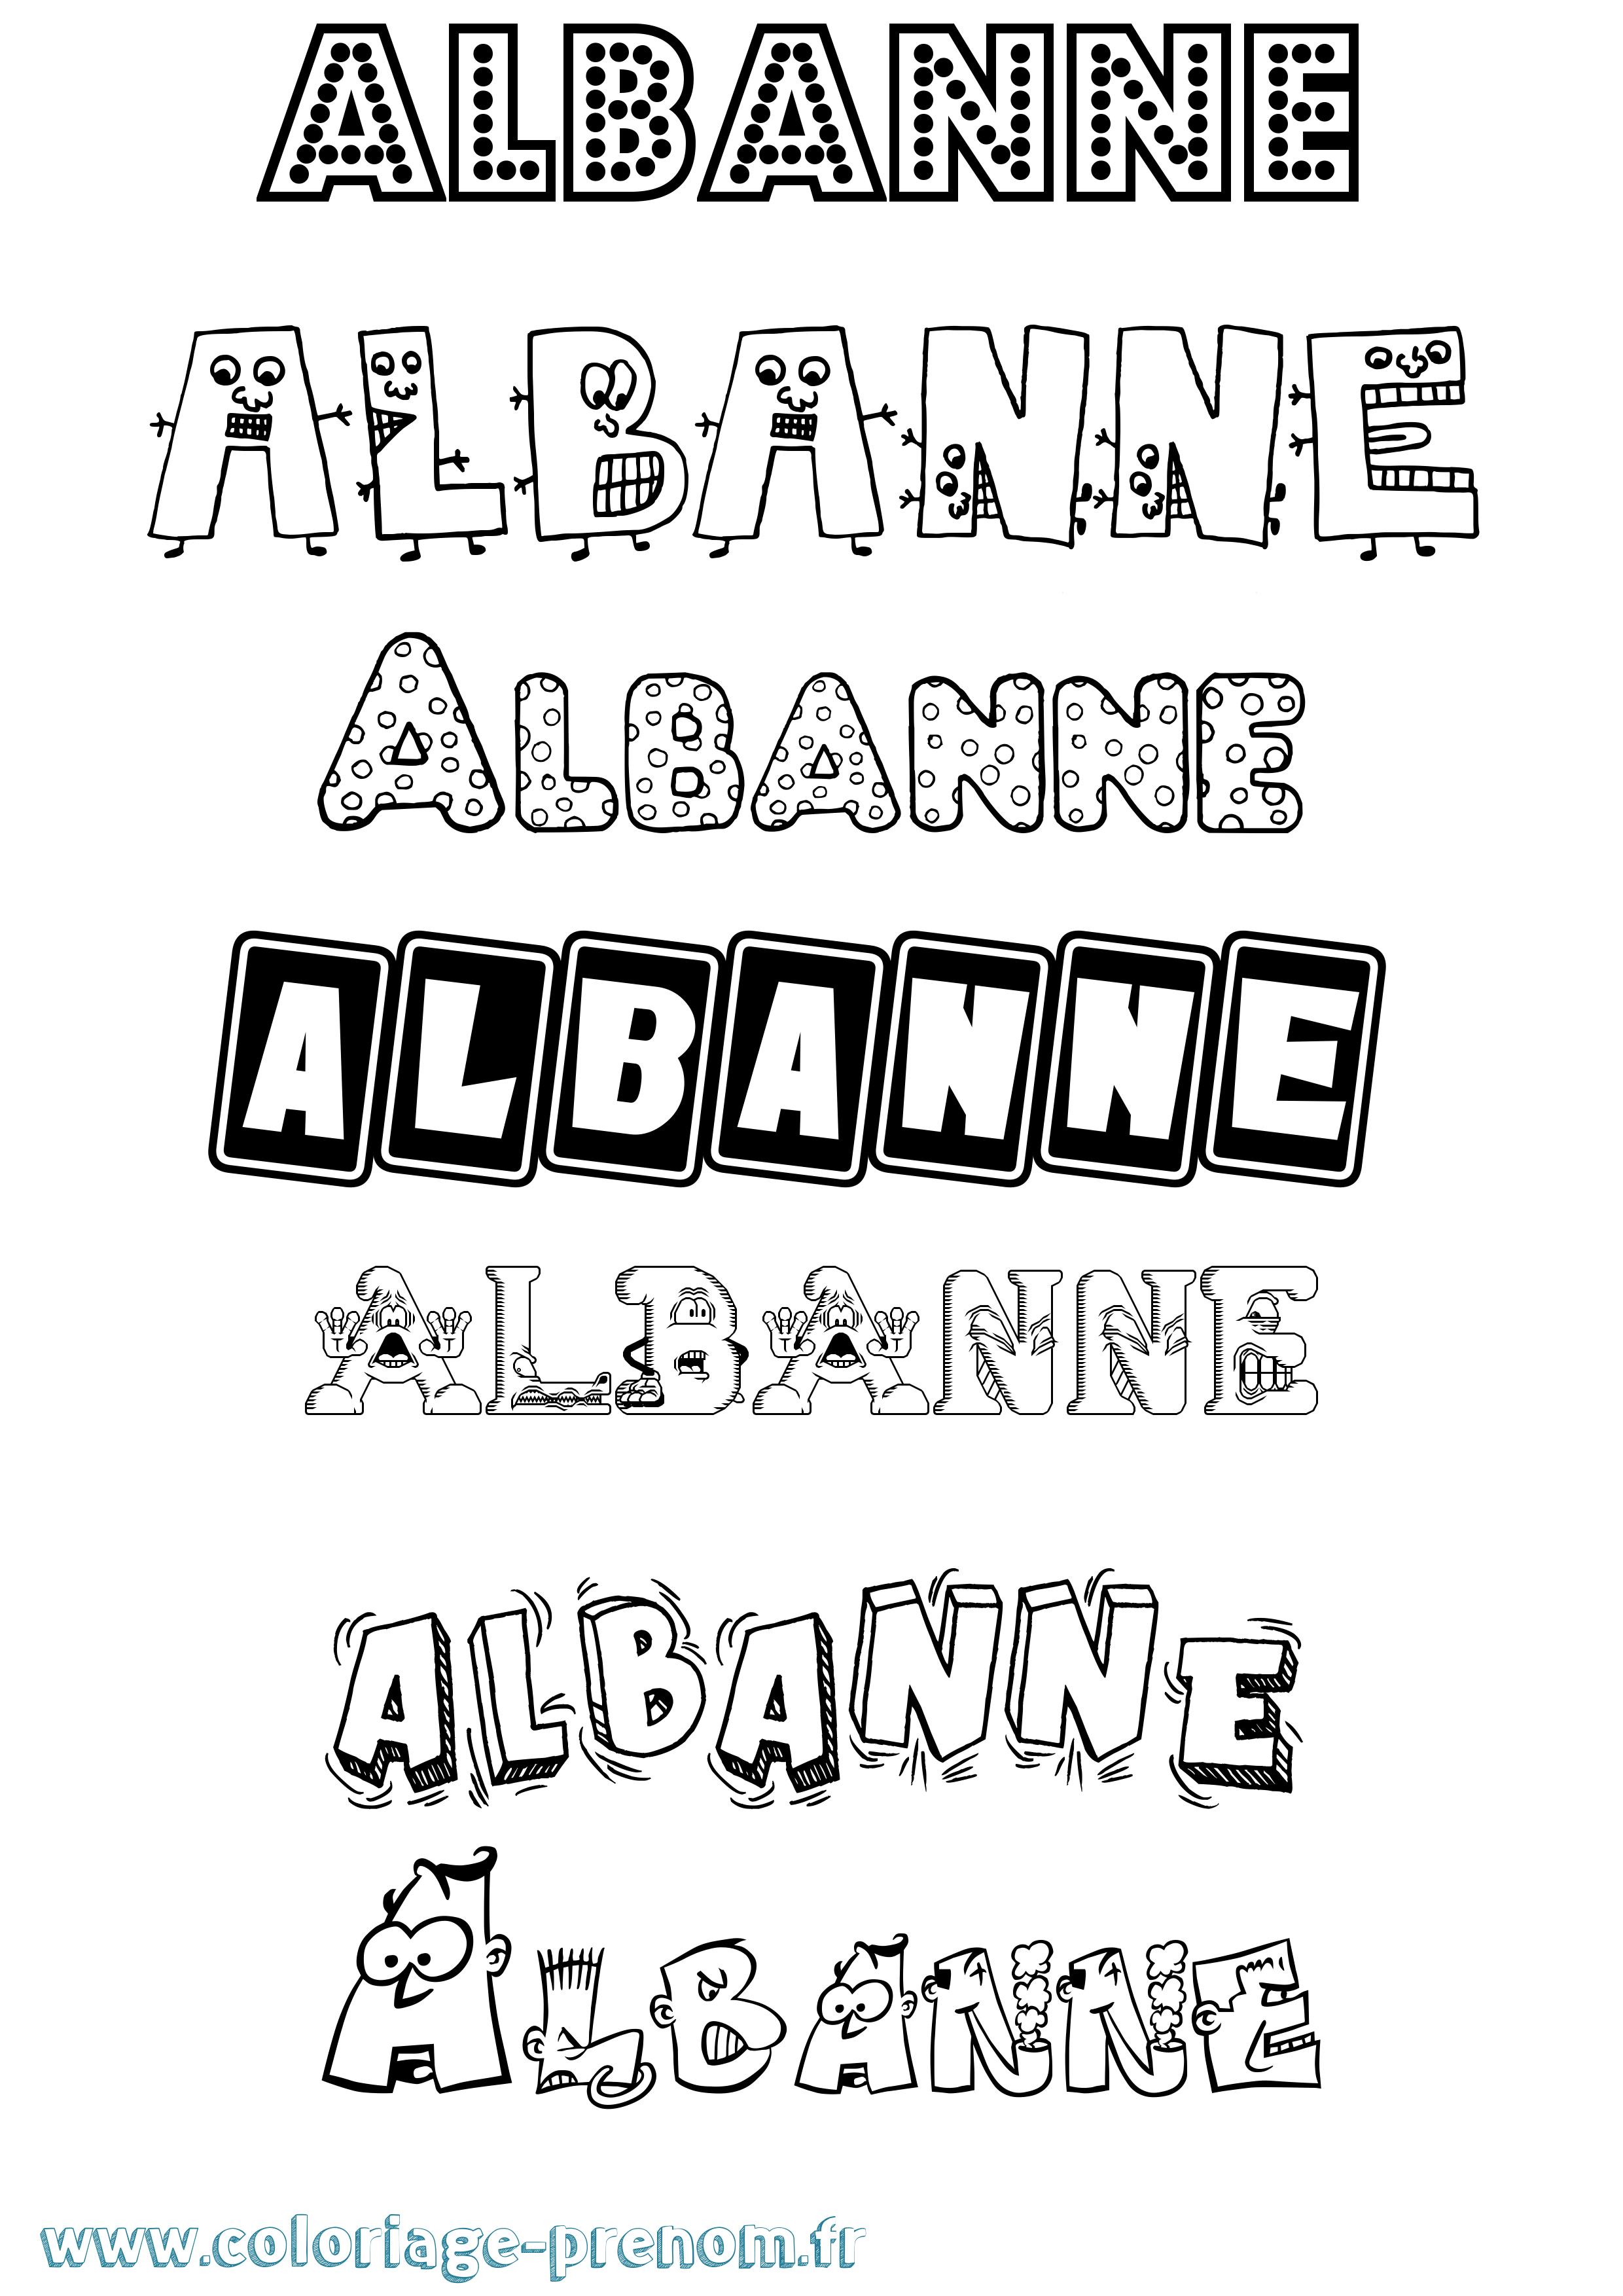 Coloriage prénom Albanne Fun